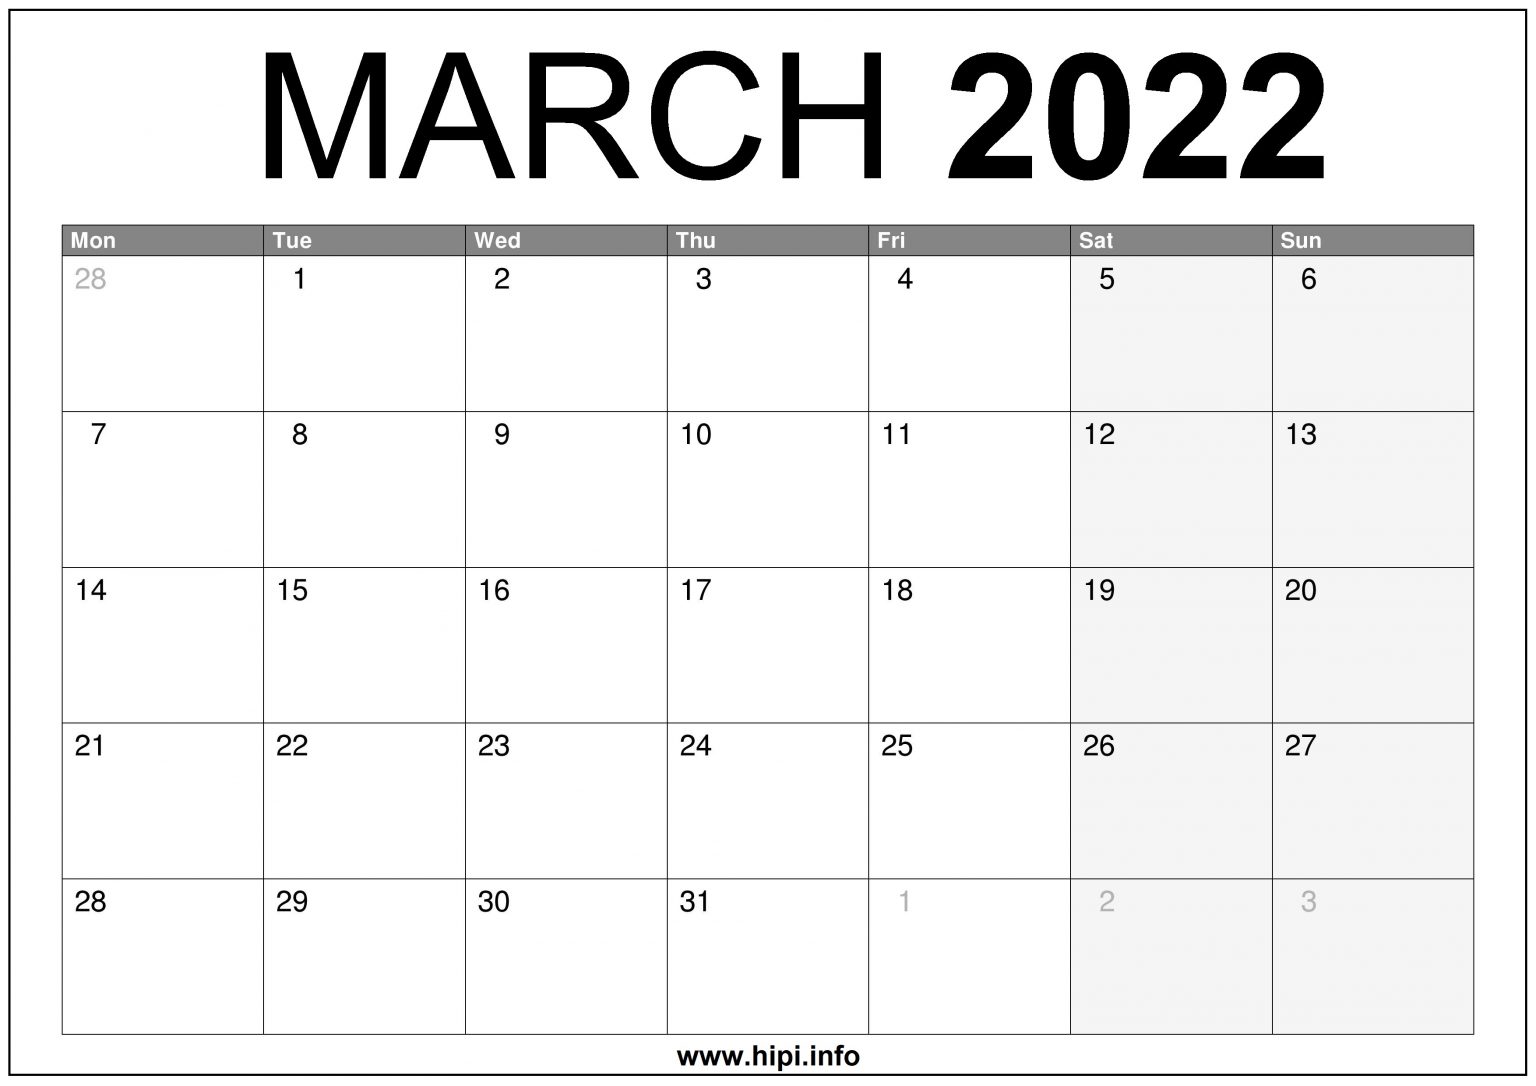 march-2022-uk-calendar-printable-free-hipi-info